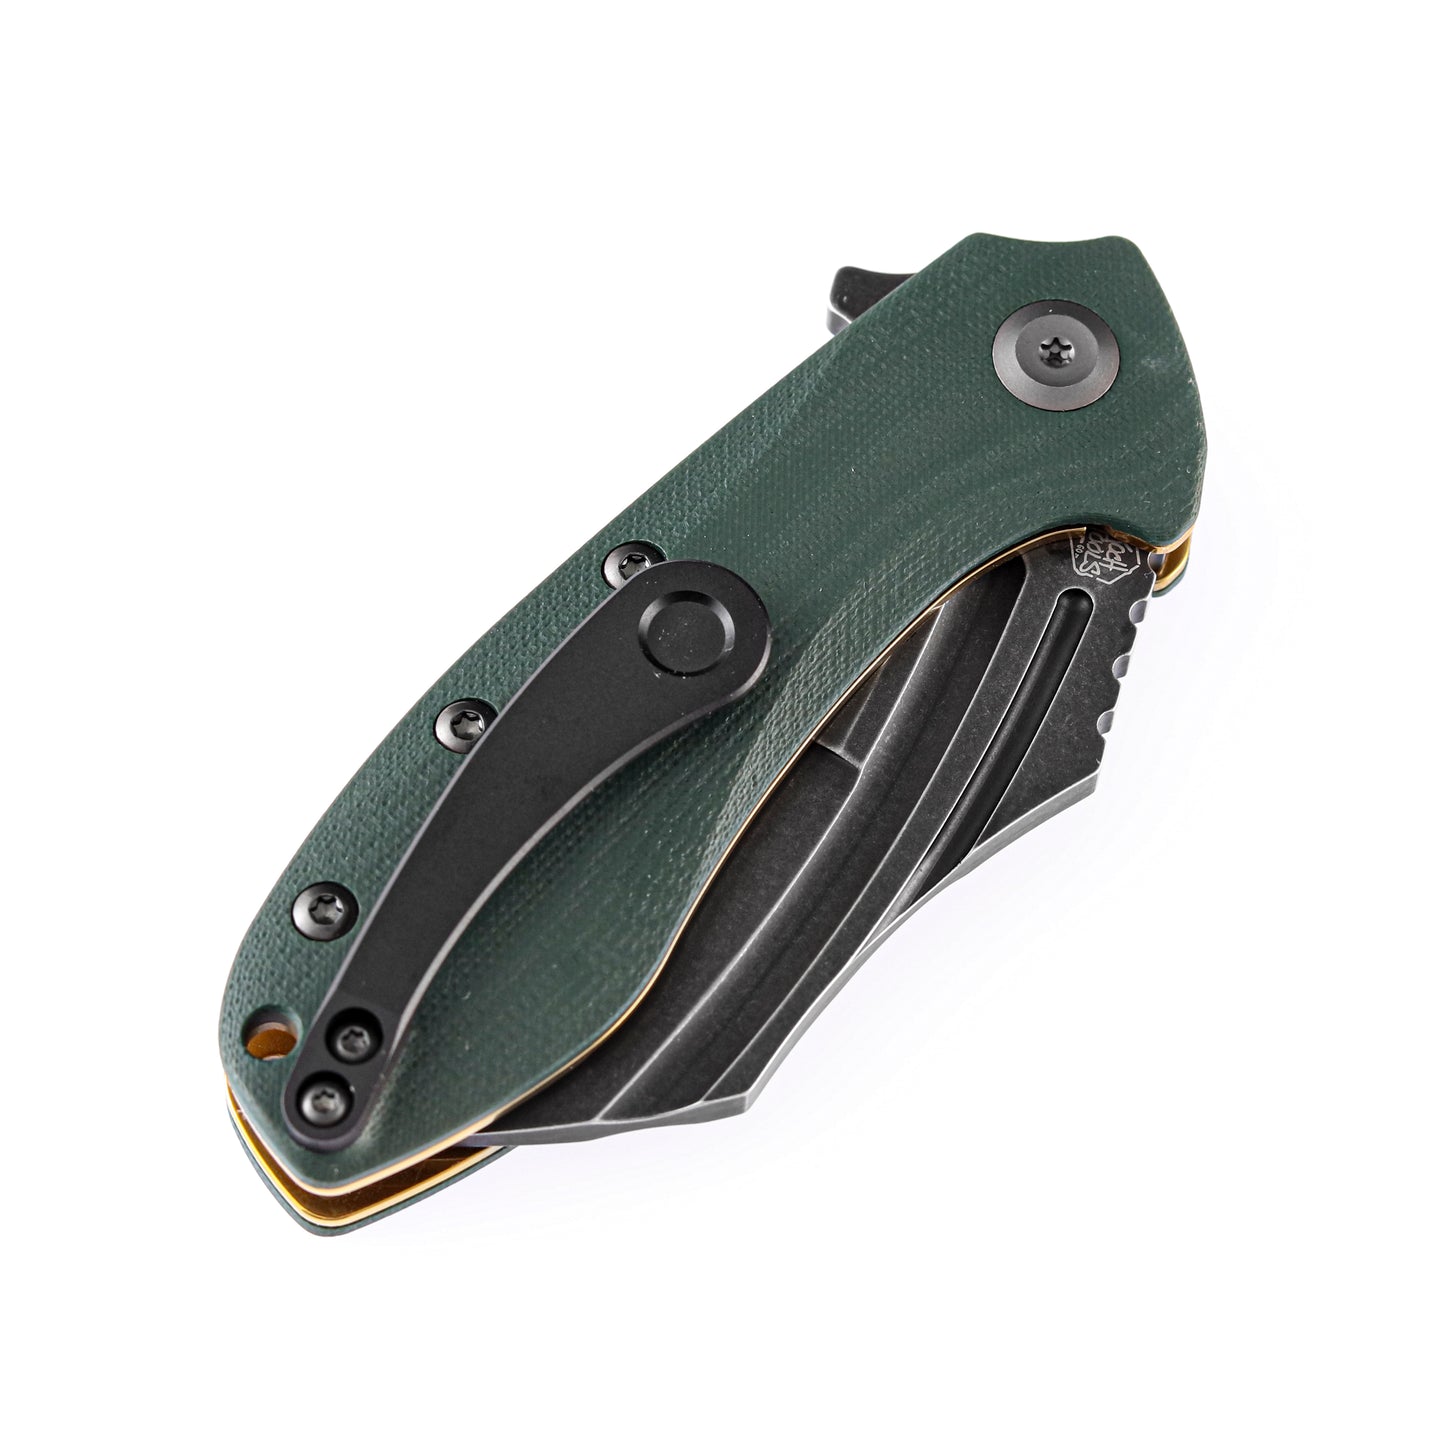 Kansept KTC3 3" Black TiCn 154CM Green G10 Folding Knife by Koch Tools T1031A2